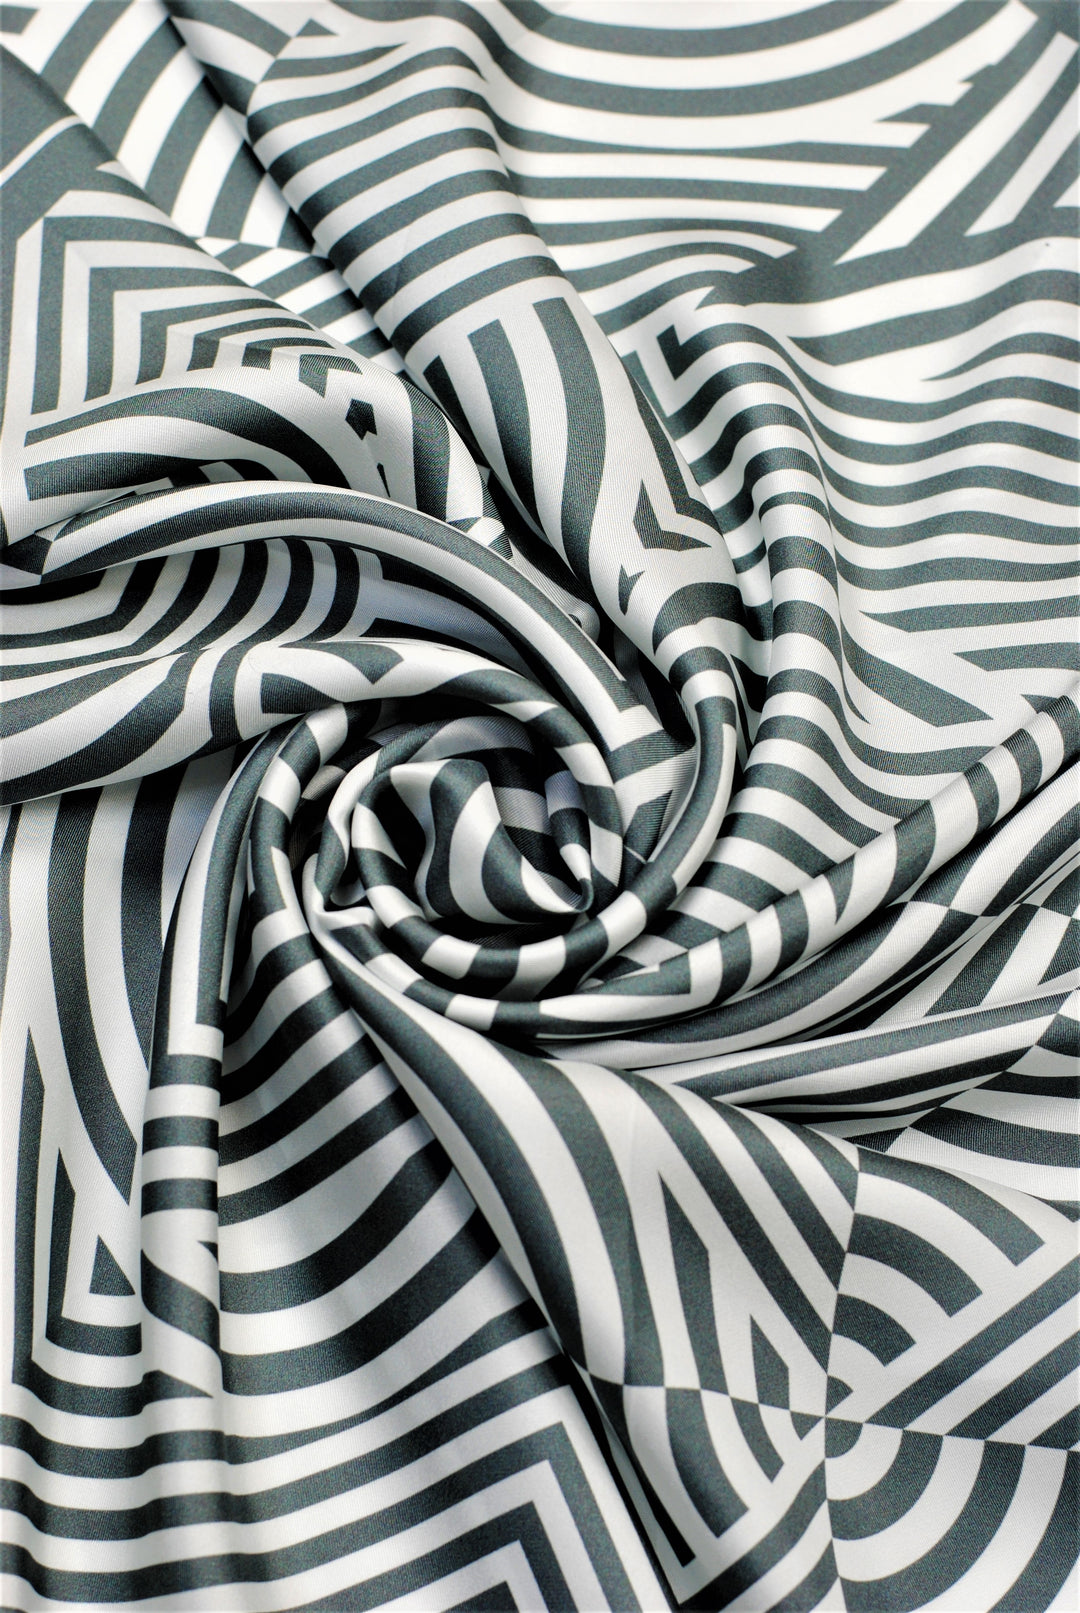 Slim Dance Mandala Art Pure Silk Scarf in Grey White Stripe by Alesia Chaika